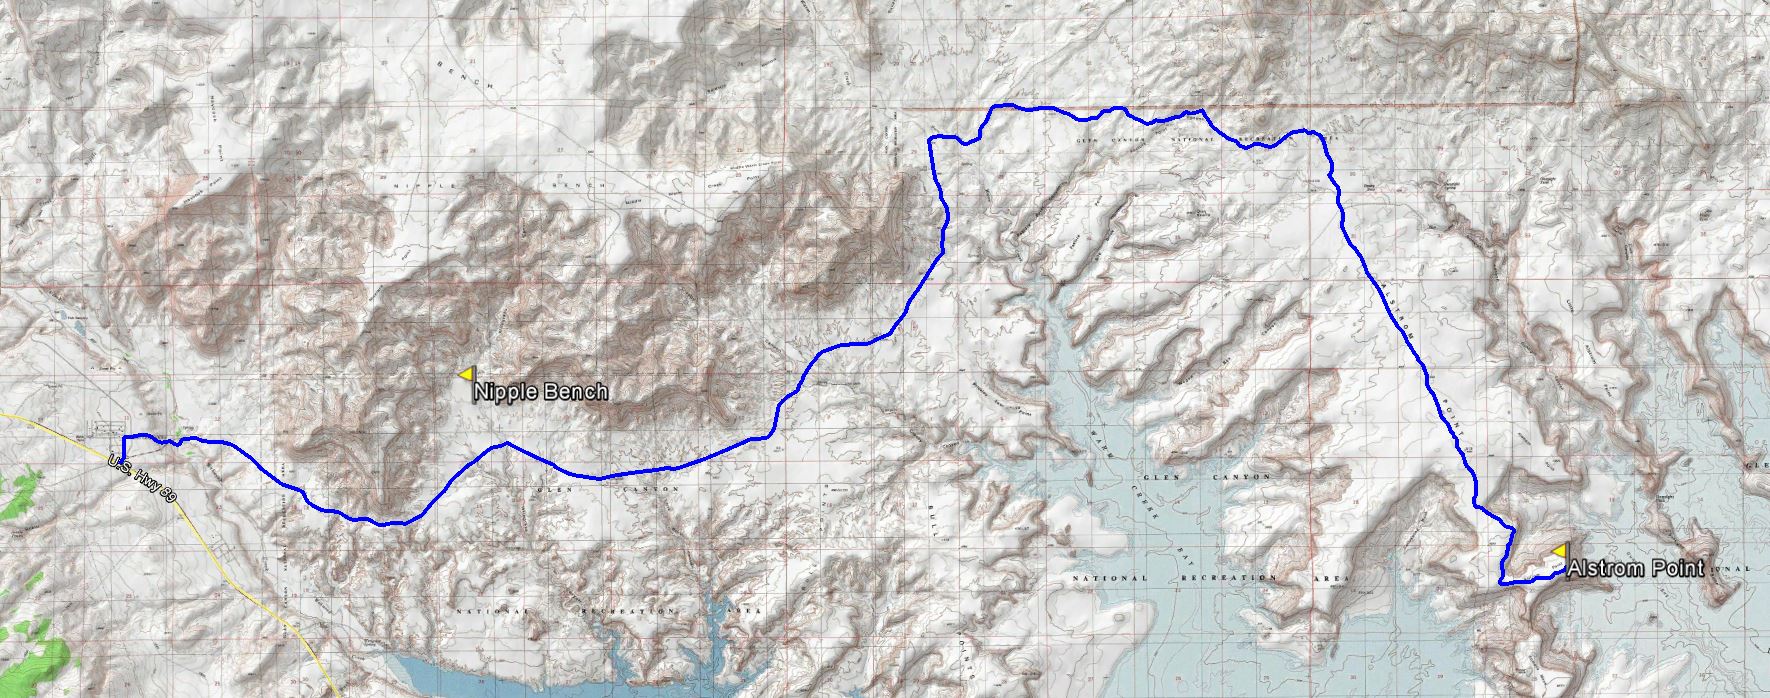 Alstrom-Point-Glen-Canyon-National-Recreation-Area-Utah-6 Alstrom Point